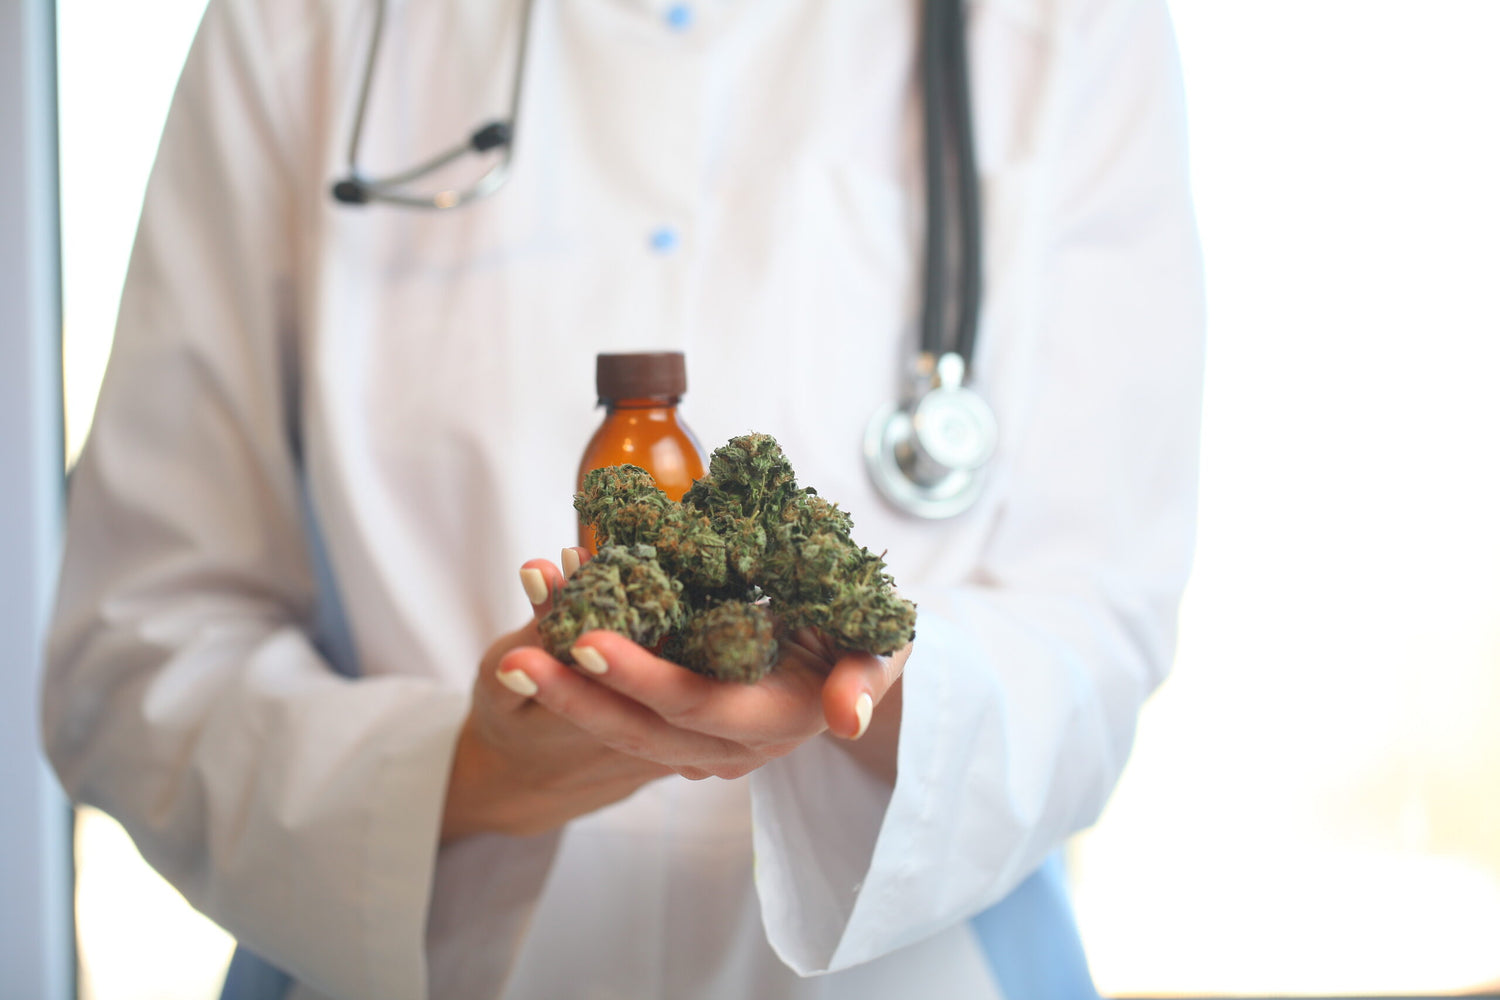 West Virginia Opens First Two Medical Marijuana Dispensaries